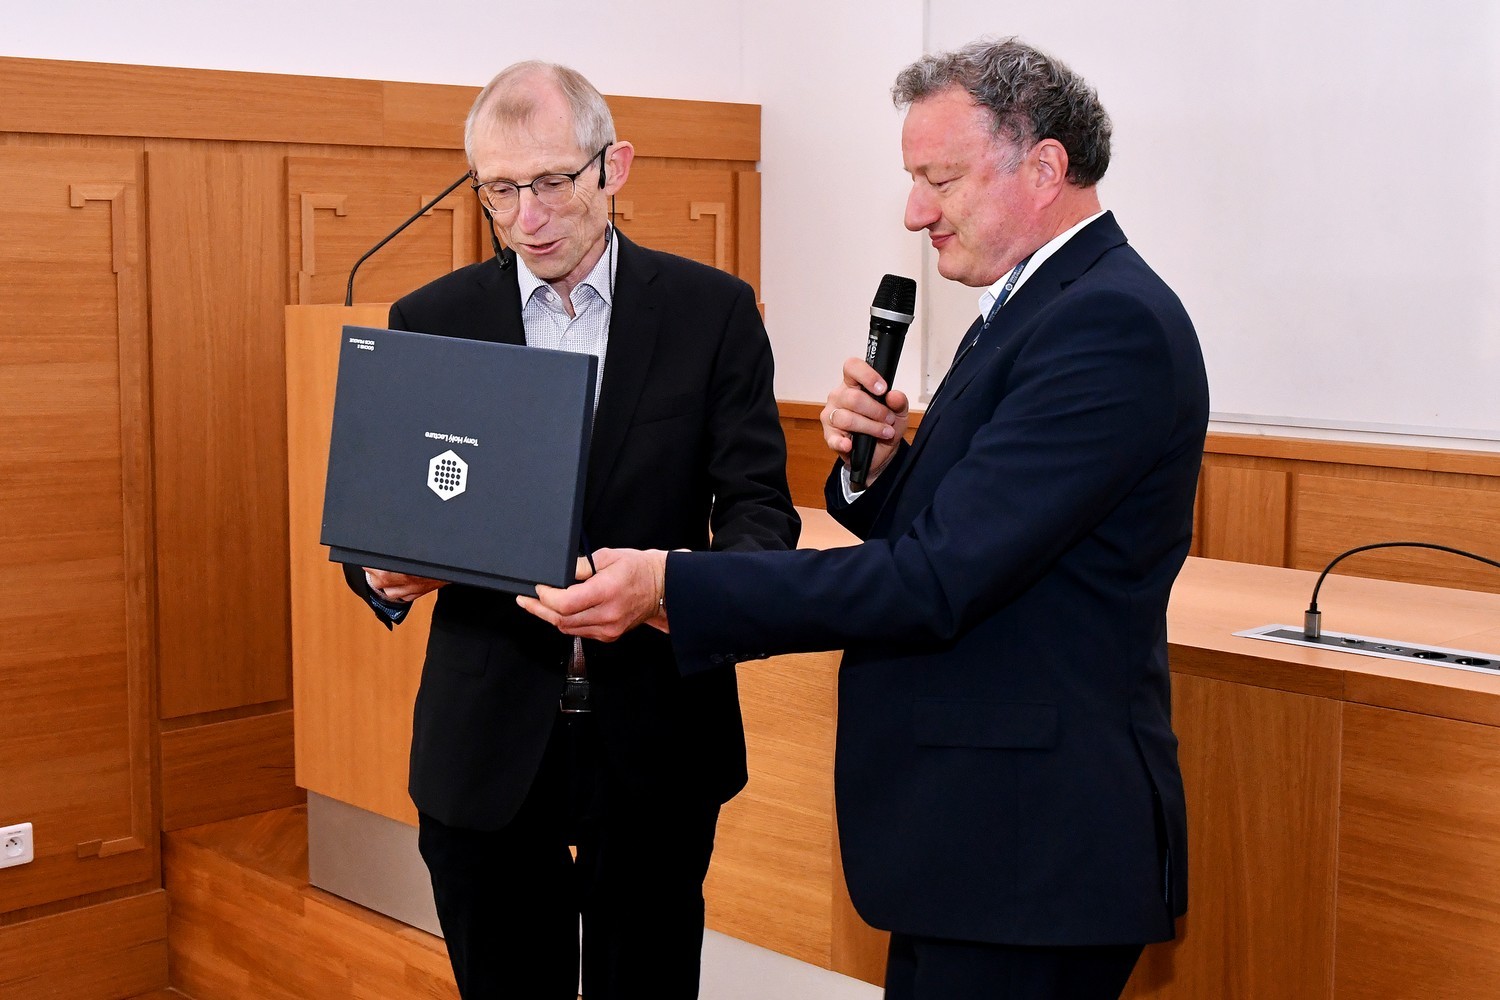 Prof. Altmann received the Tony Holý Lecture plaque